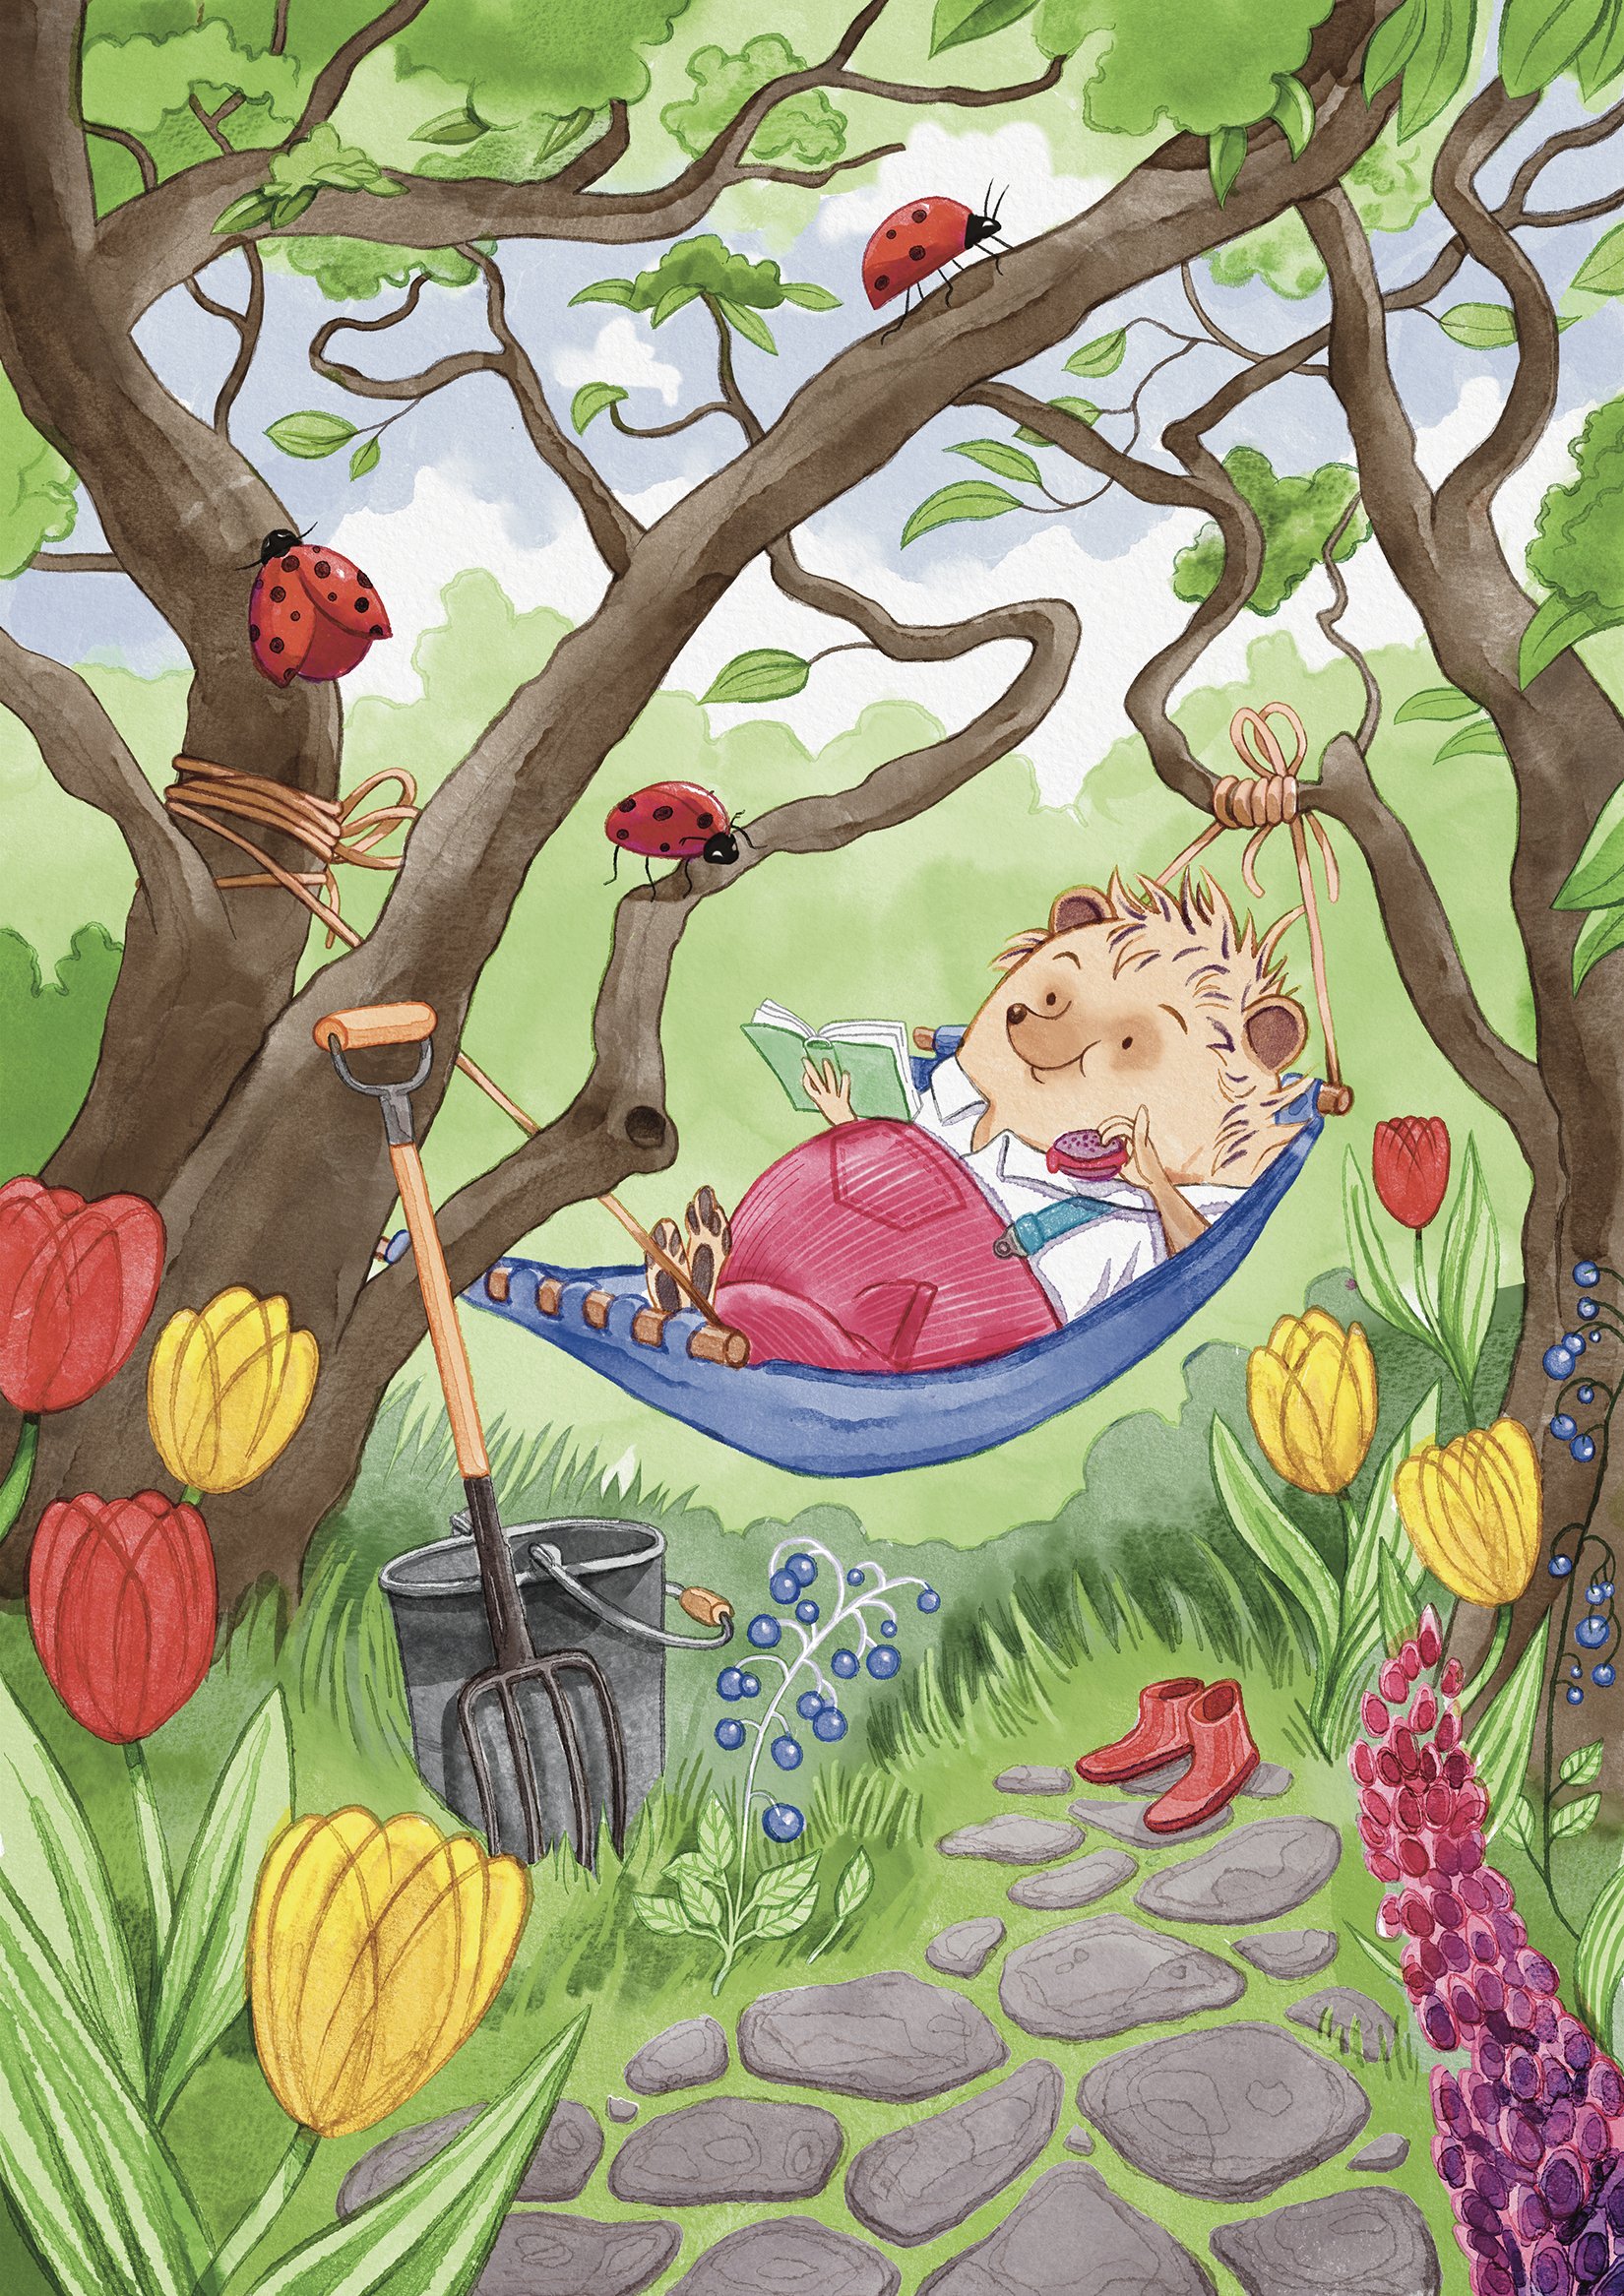 anthro_animal_hedgehog_garden_hammock_picnic_gardening_bisquit_reading_reader_book_flower_tulip_ladybug.jpg